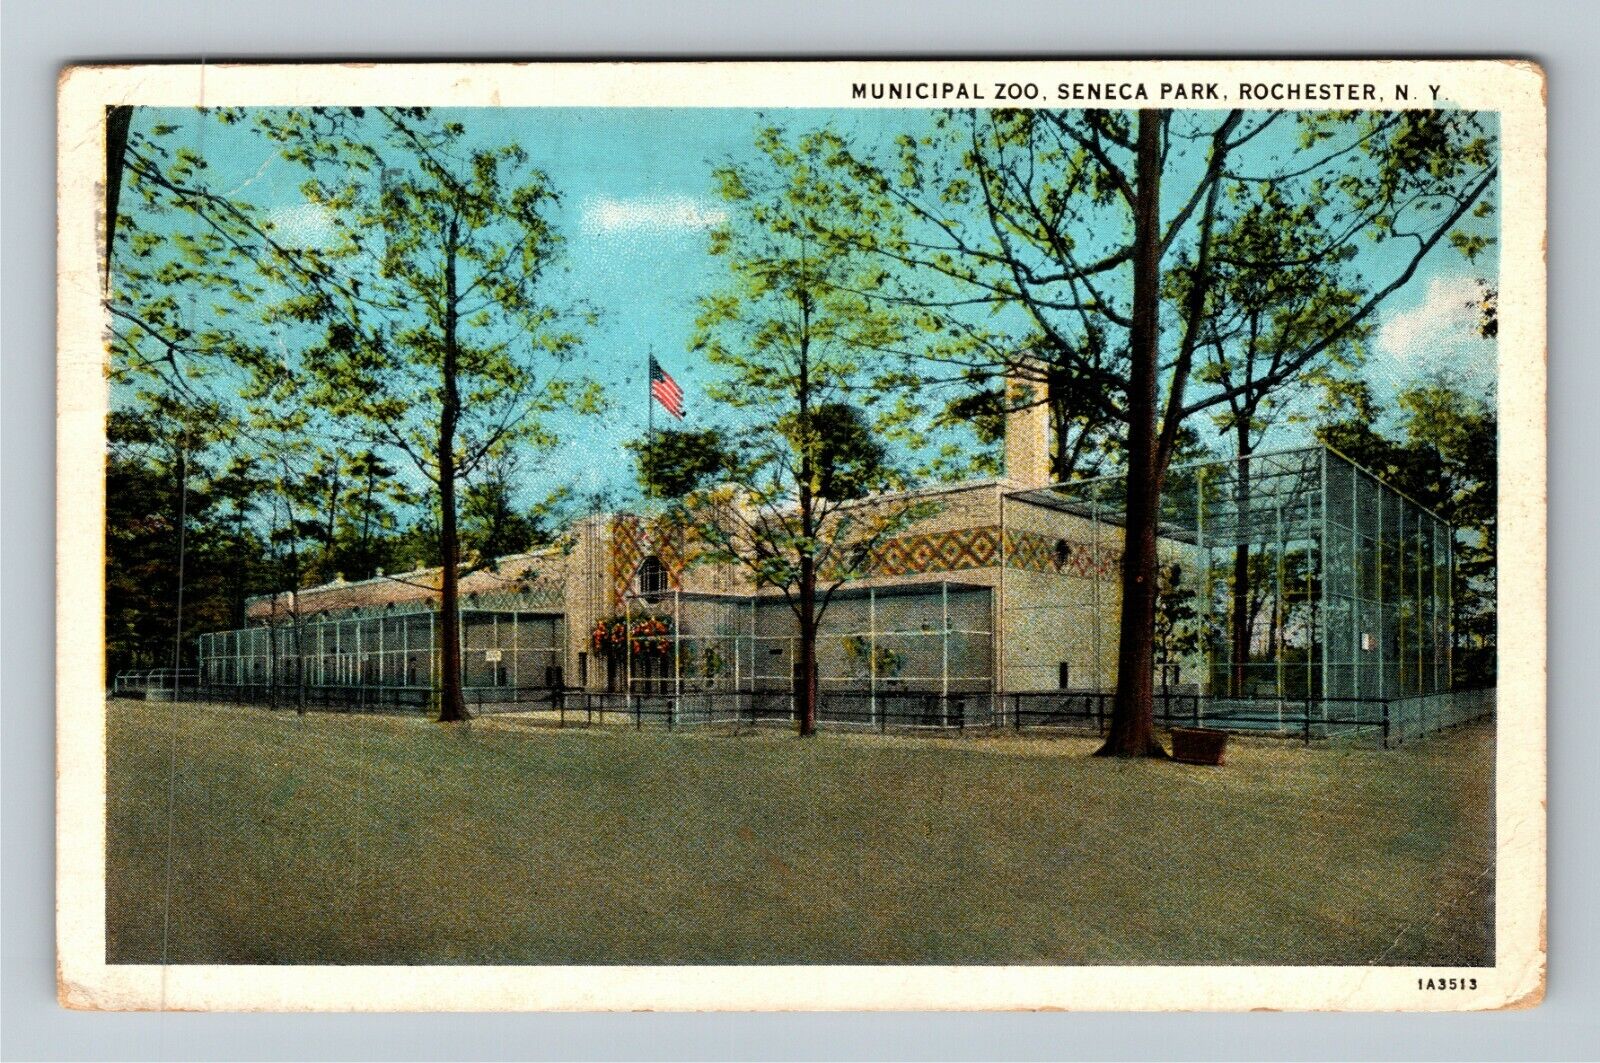 Rochester NY-New York Seneca Park Municipal Zoo Building, c1932 Vintage Postcard